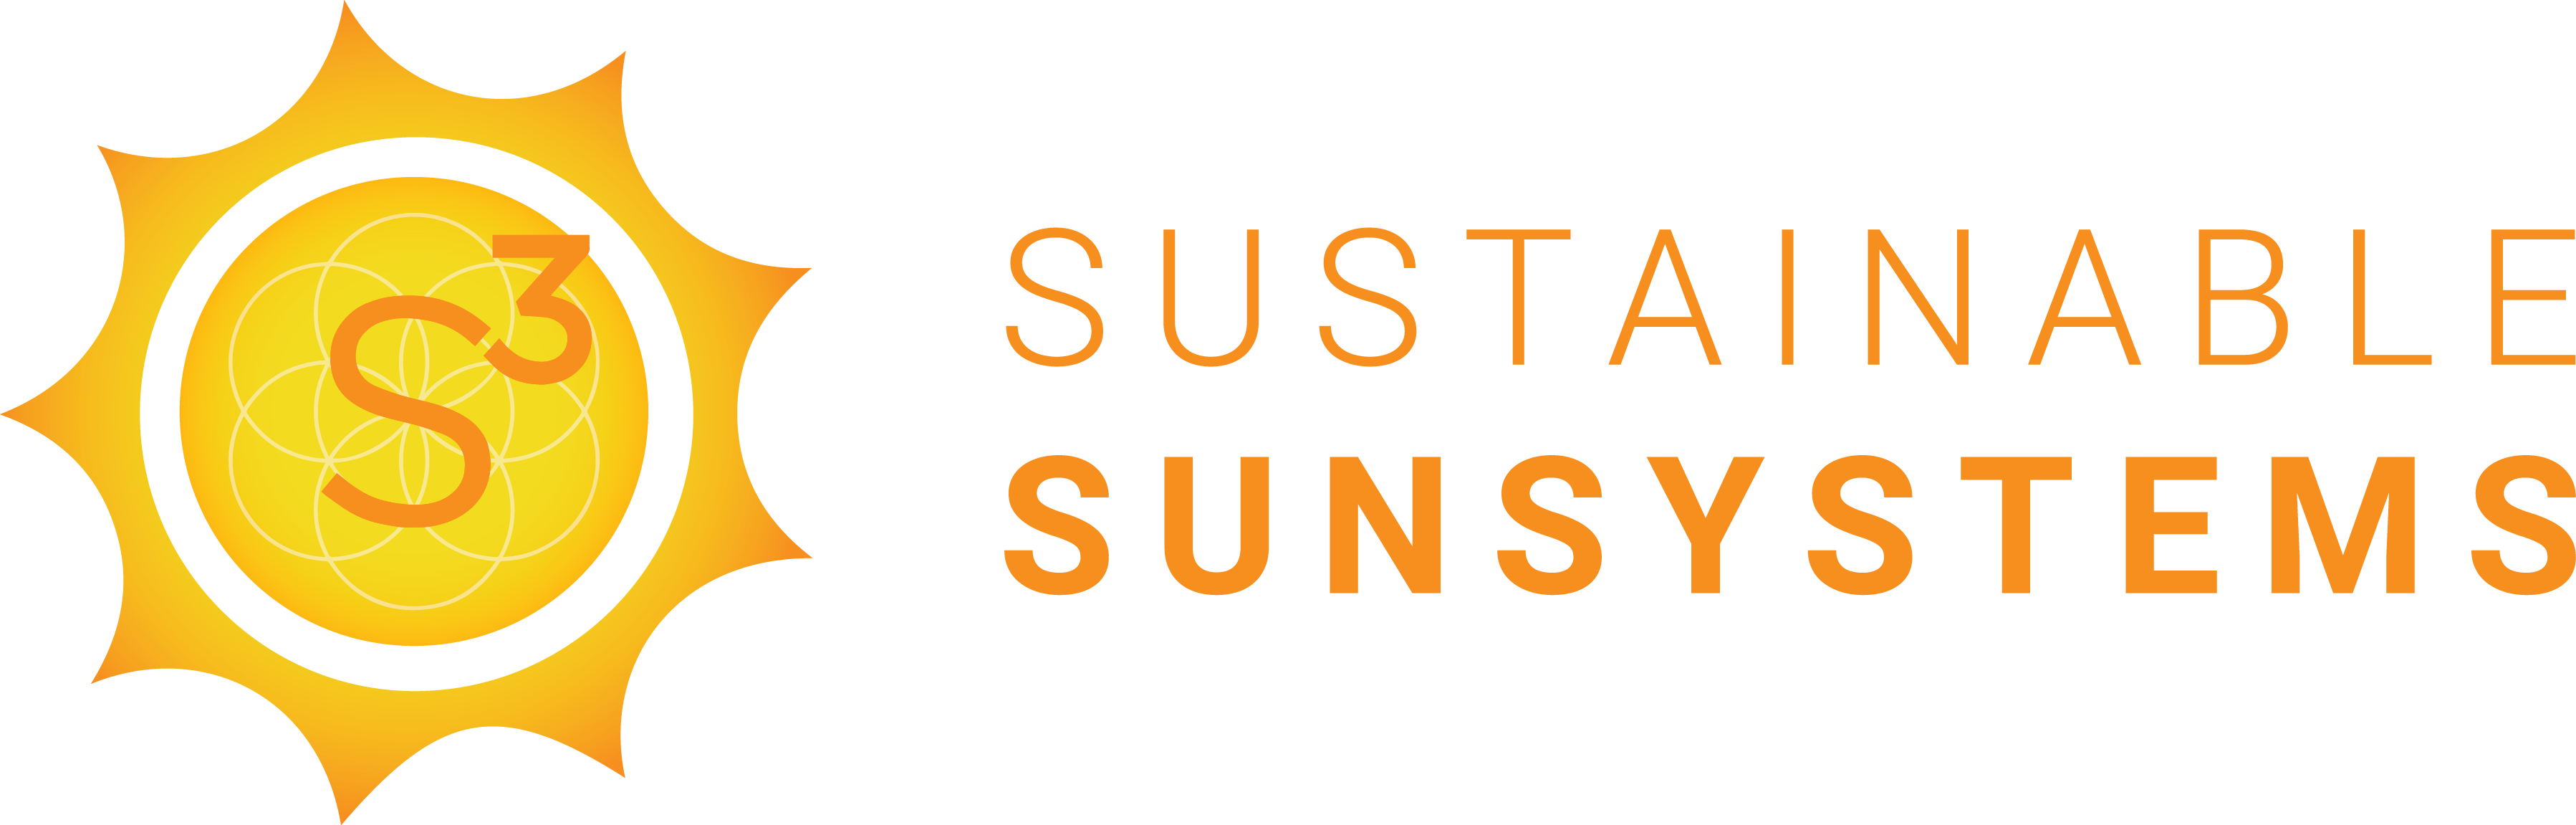 Sustainable Sun Systems